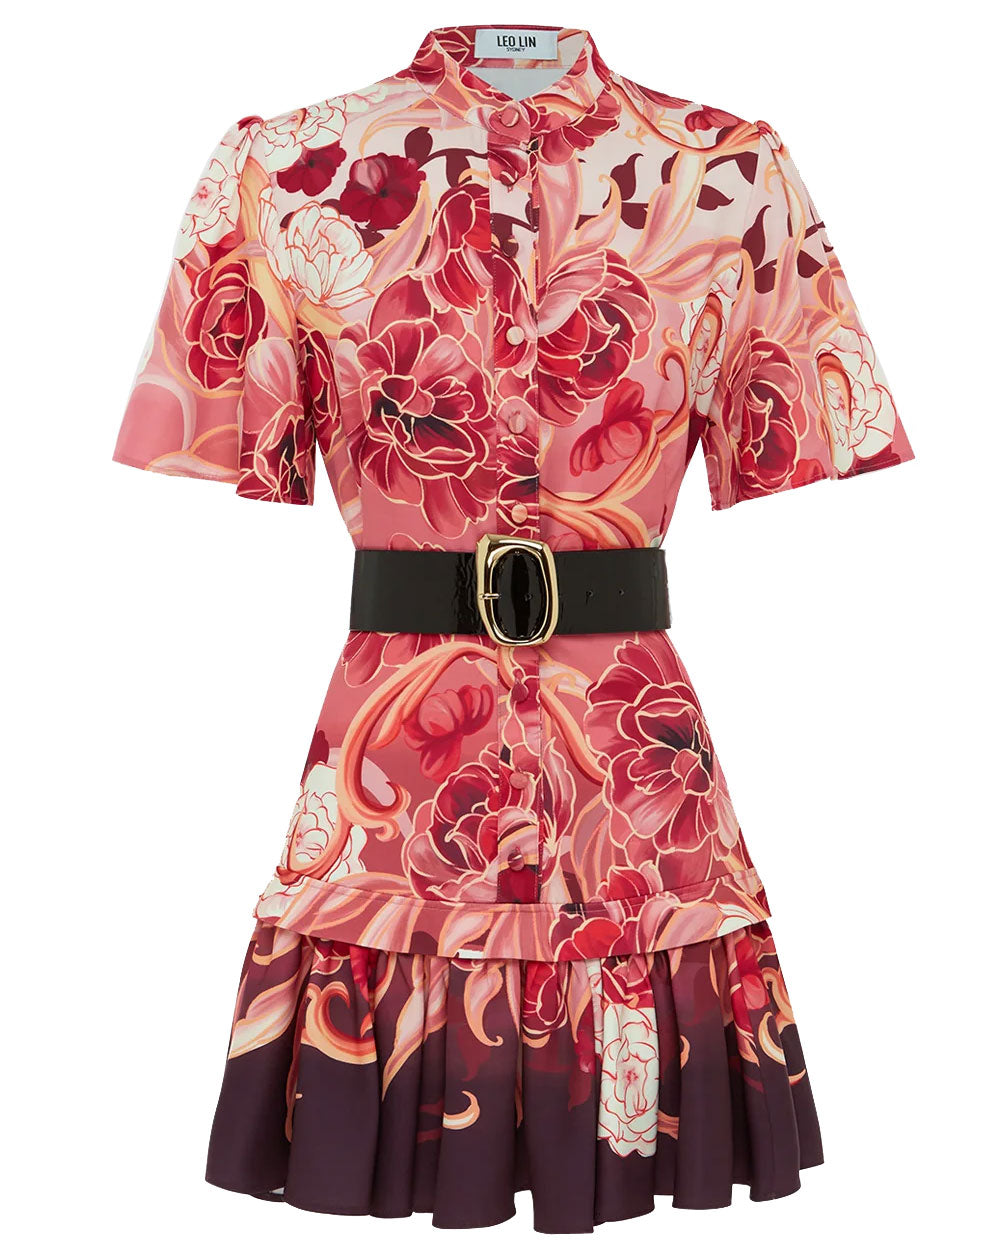 Adorn Print in Passion Beatrice Mini Dress